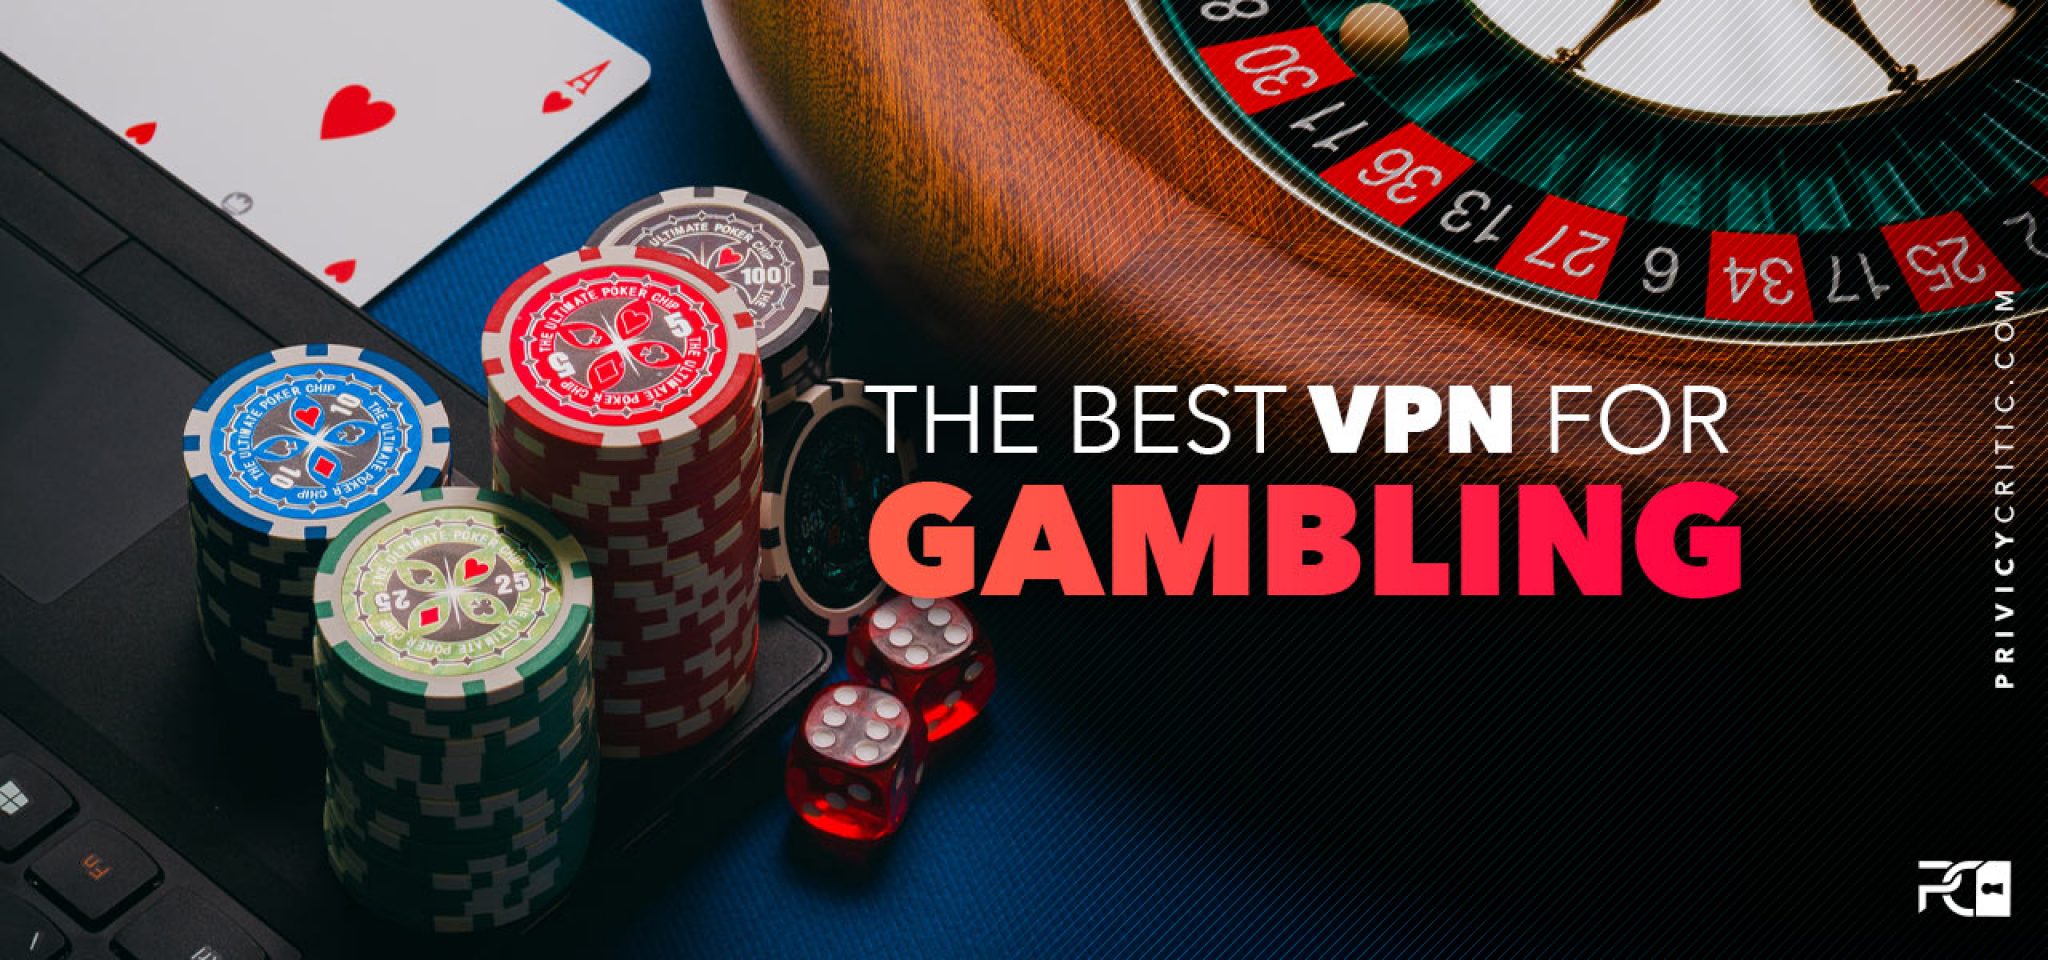 can you gamble online through vpn